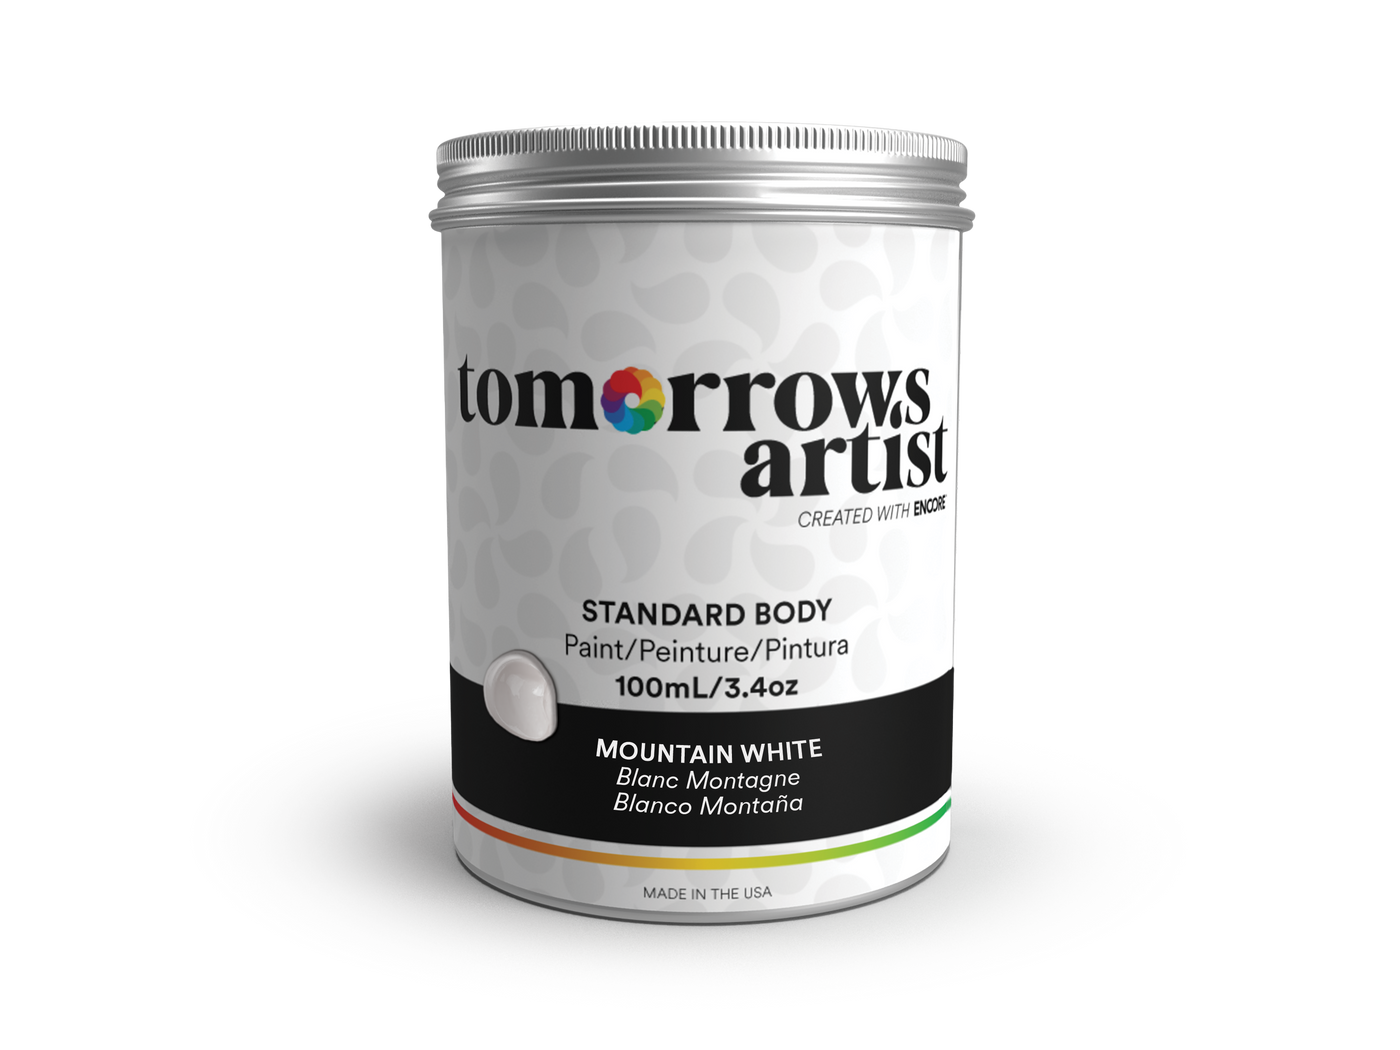 Tomorrows Artist: Standard Body Eco-Friendly Acrylic Art Paint 100ml/3.38oz Jar